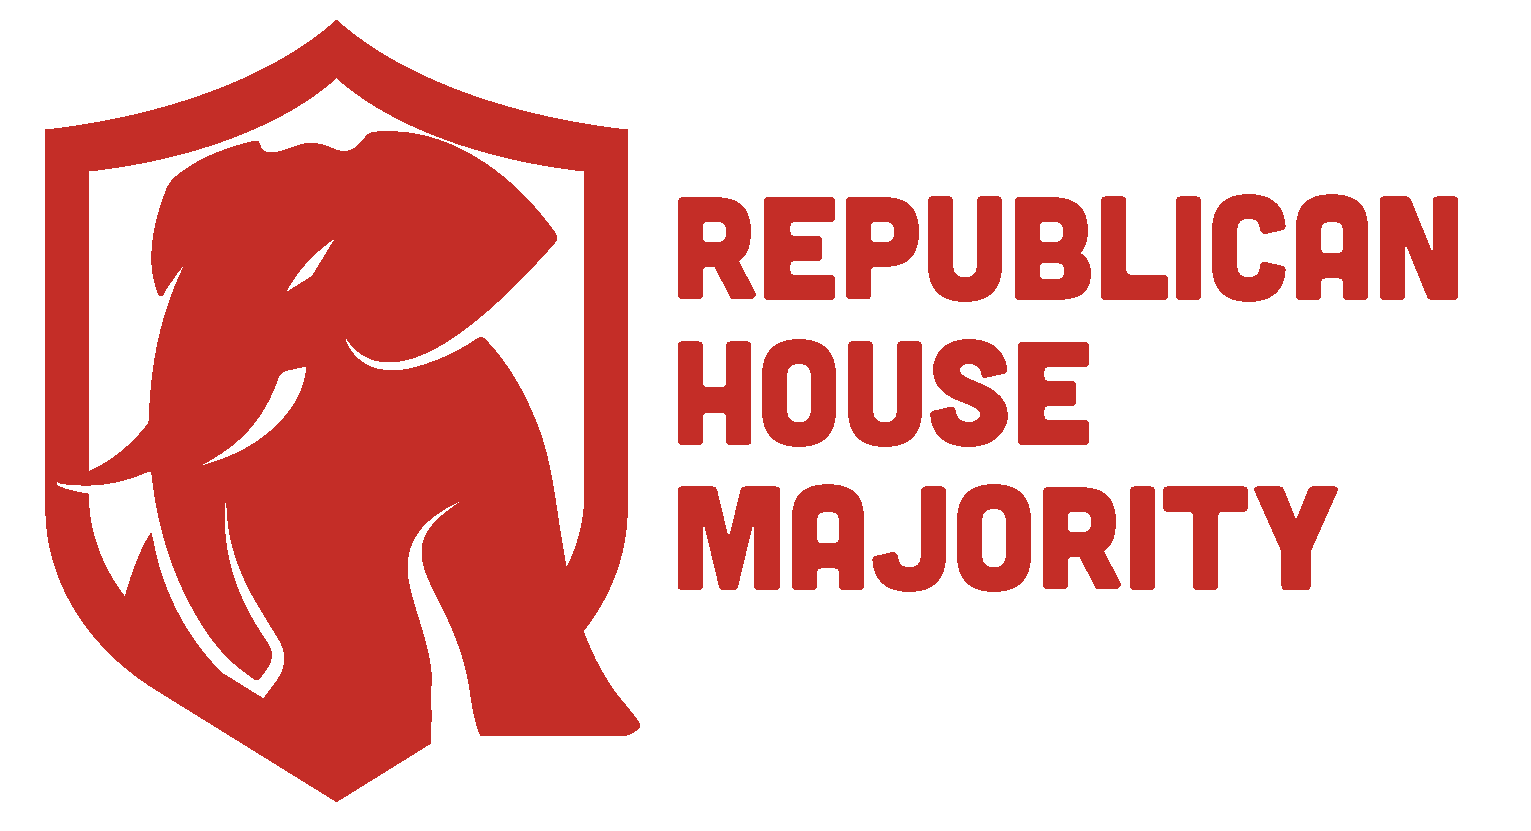 Republican hm logo copy